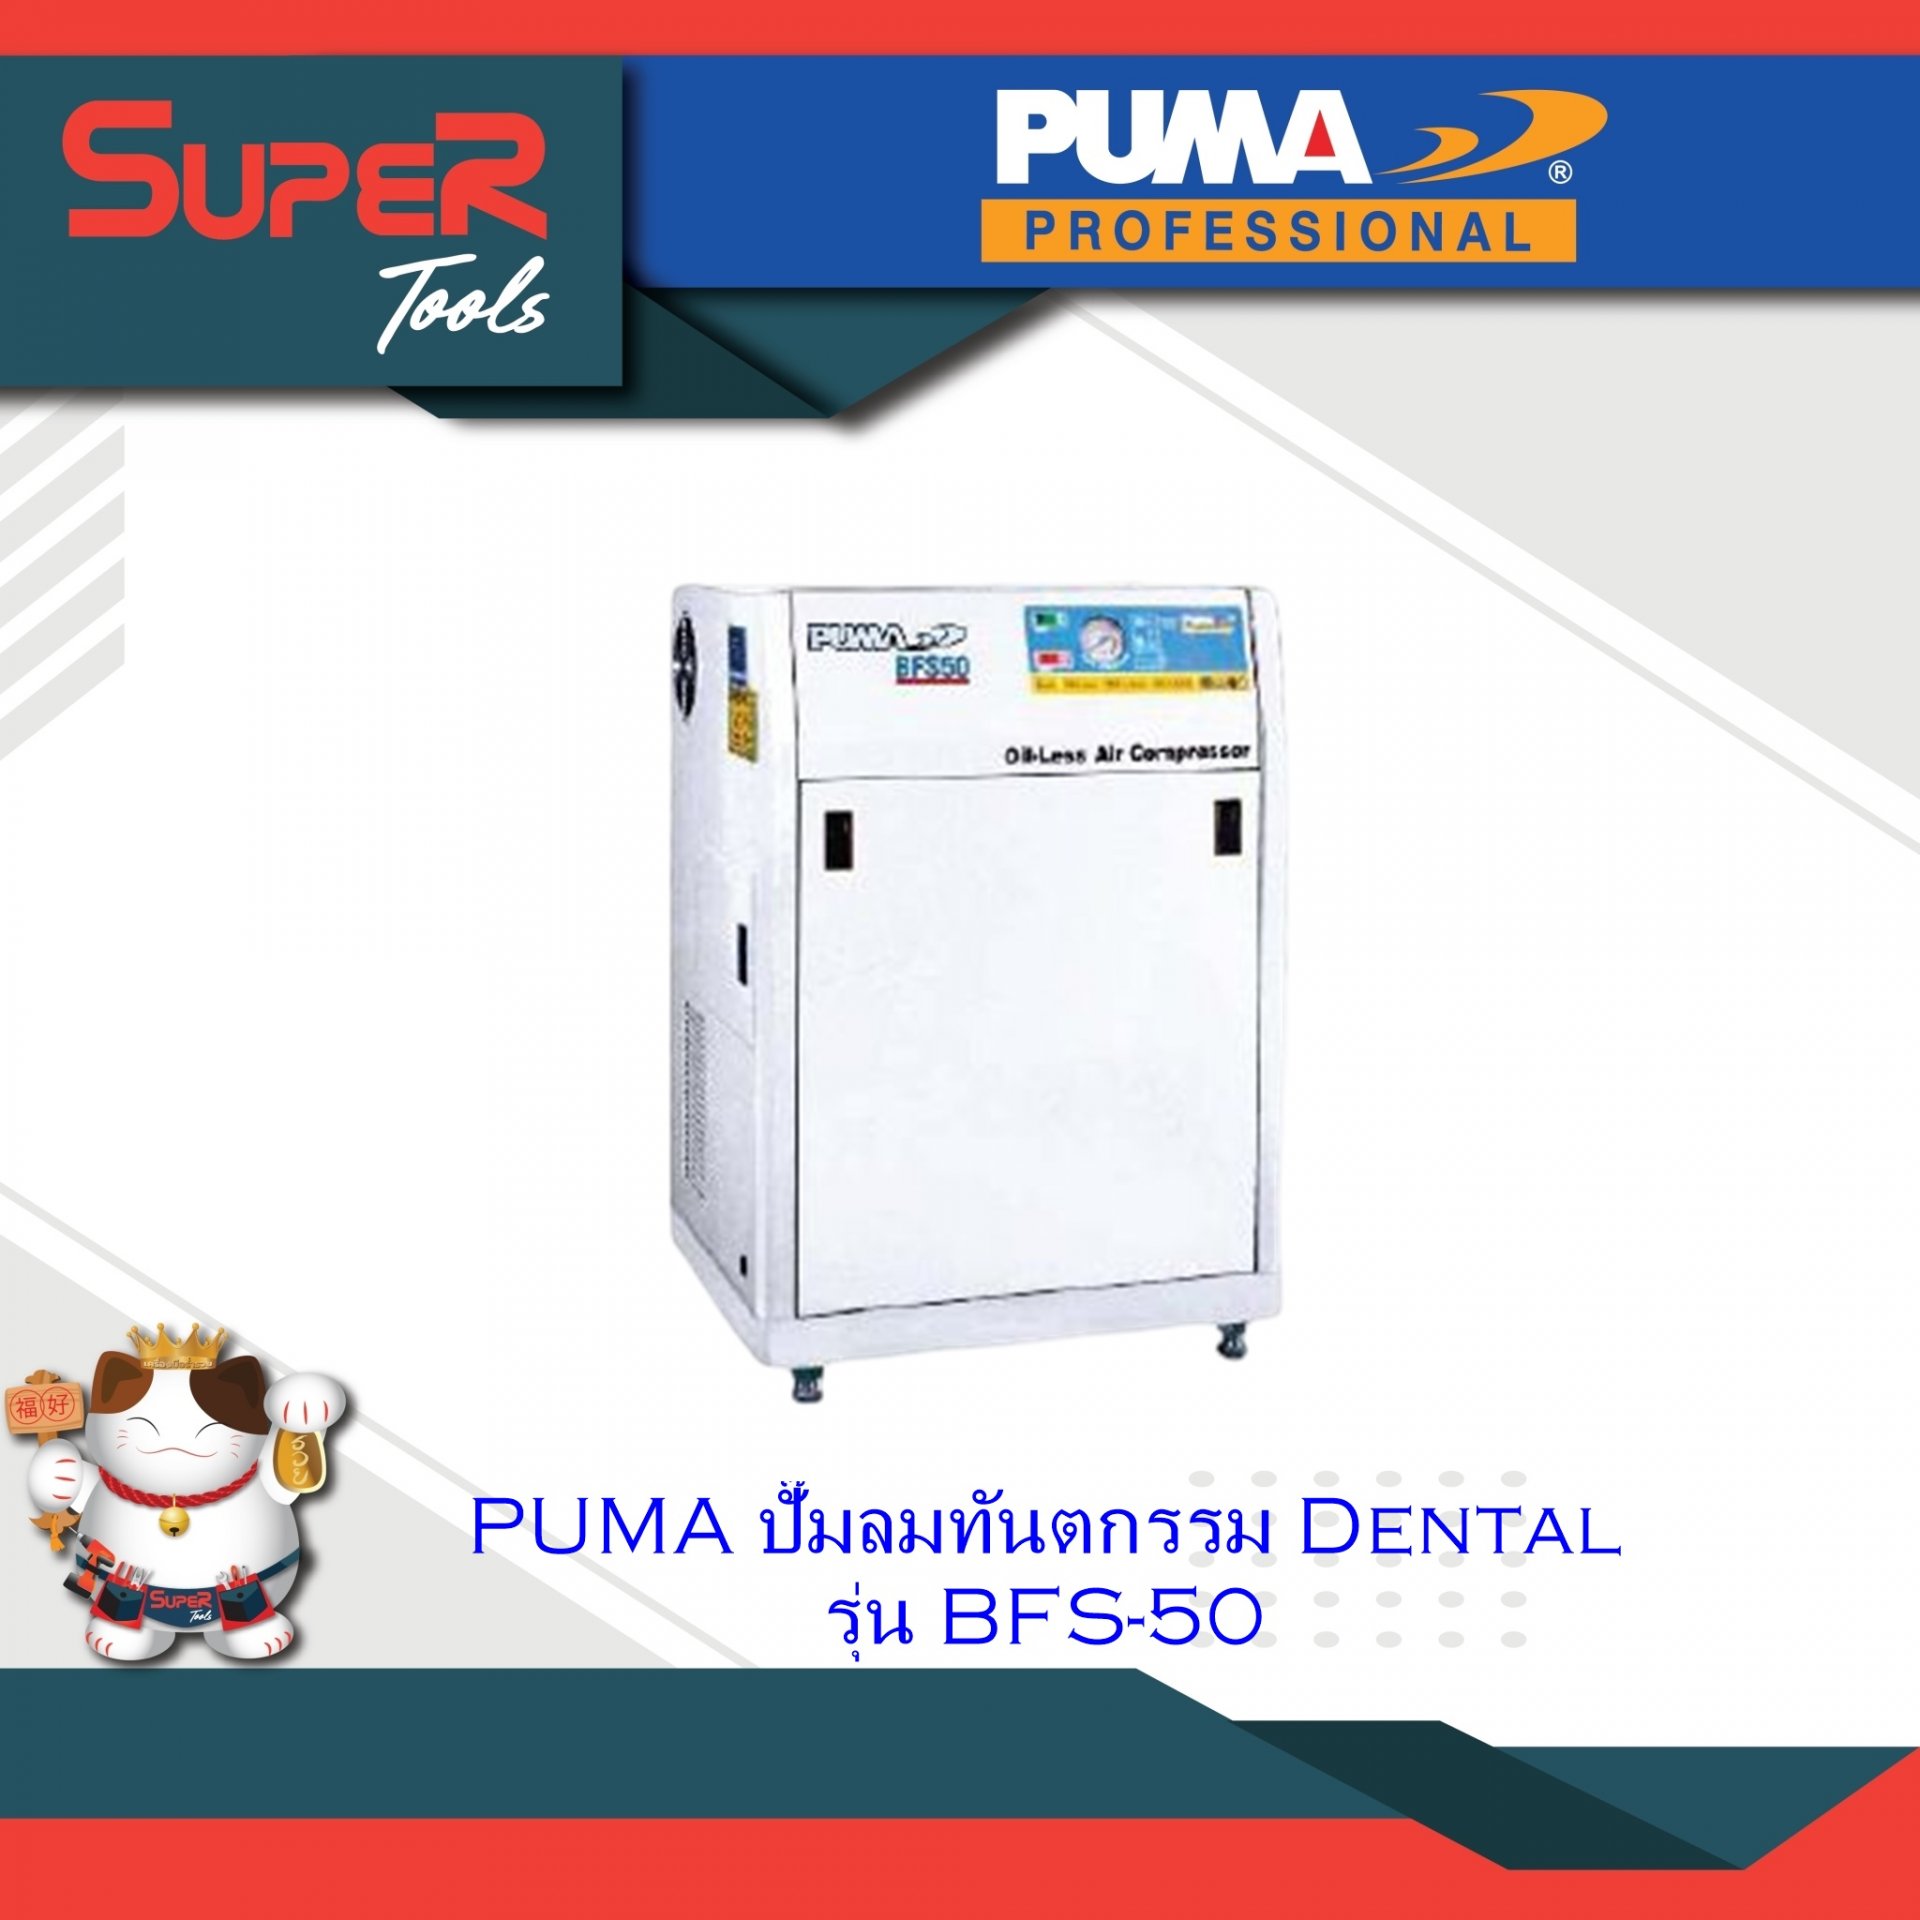 PUMA ปั๊มลมทันตกรรม Dental รุ่น BFS-50